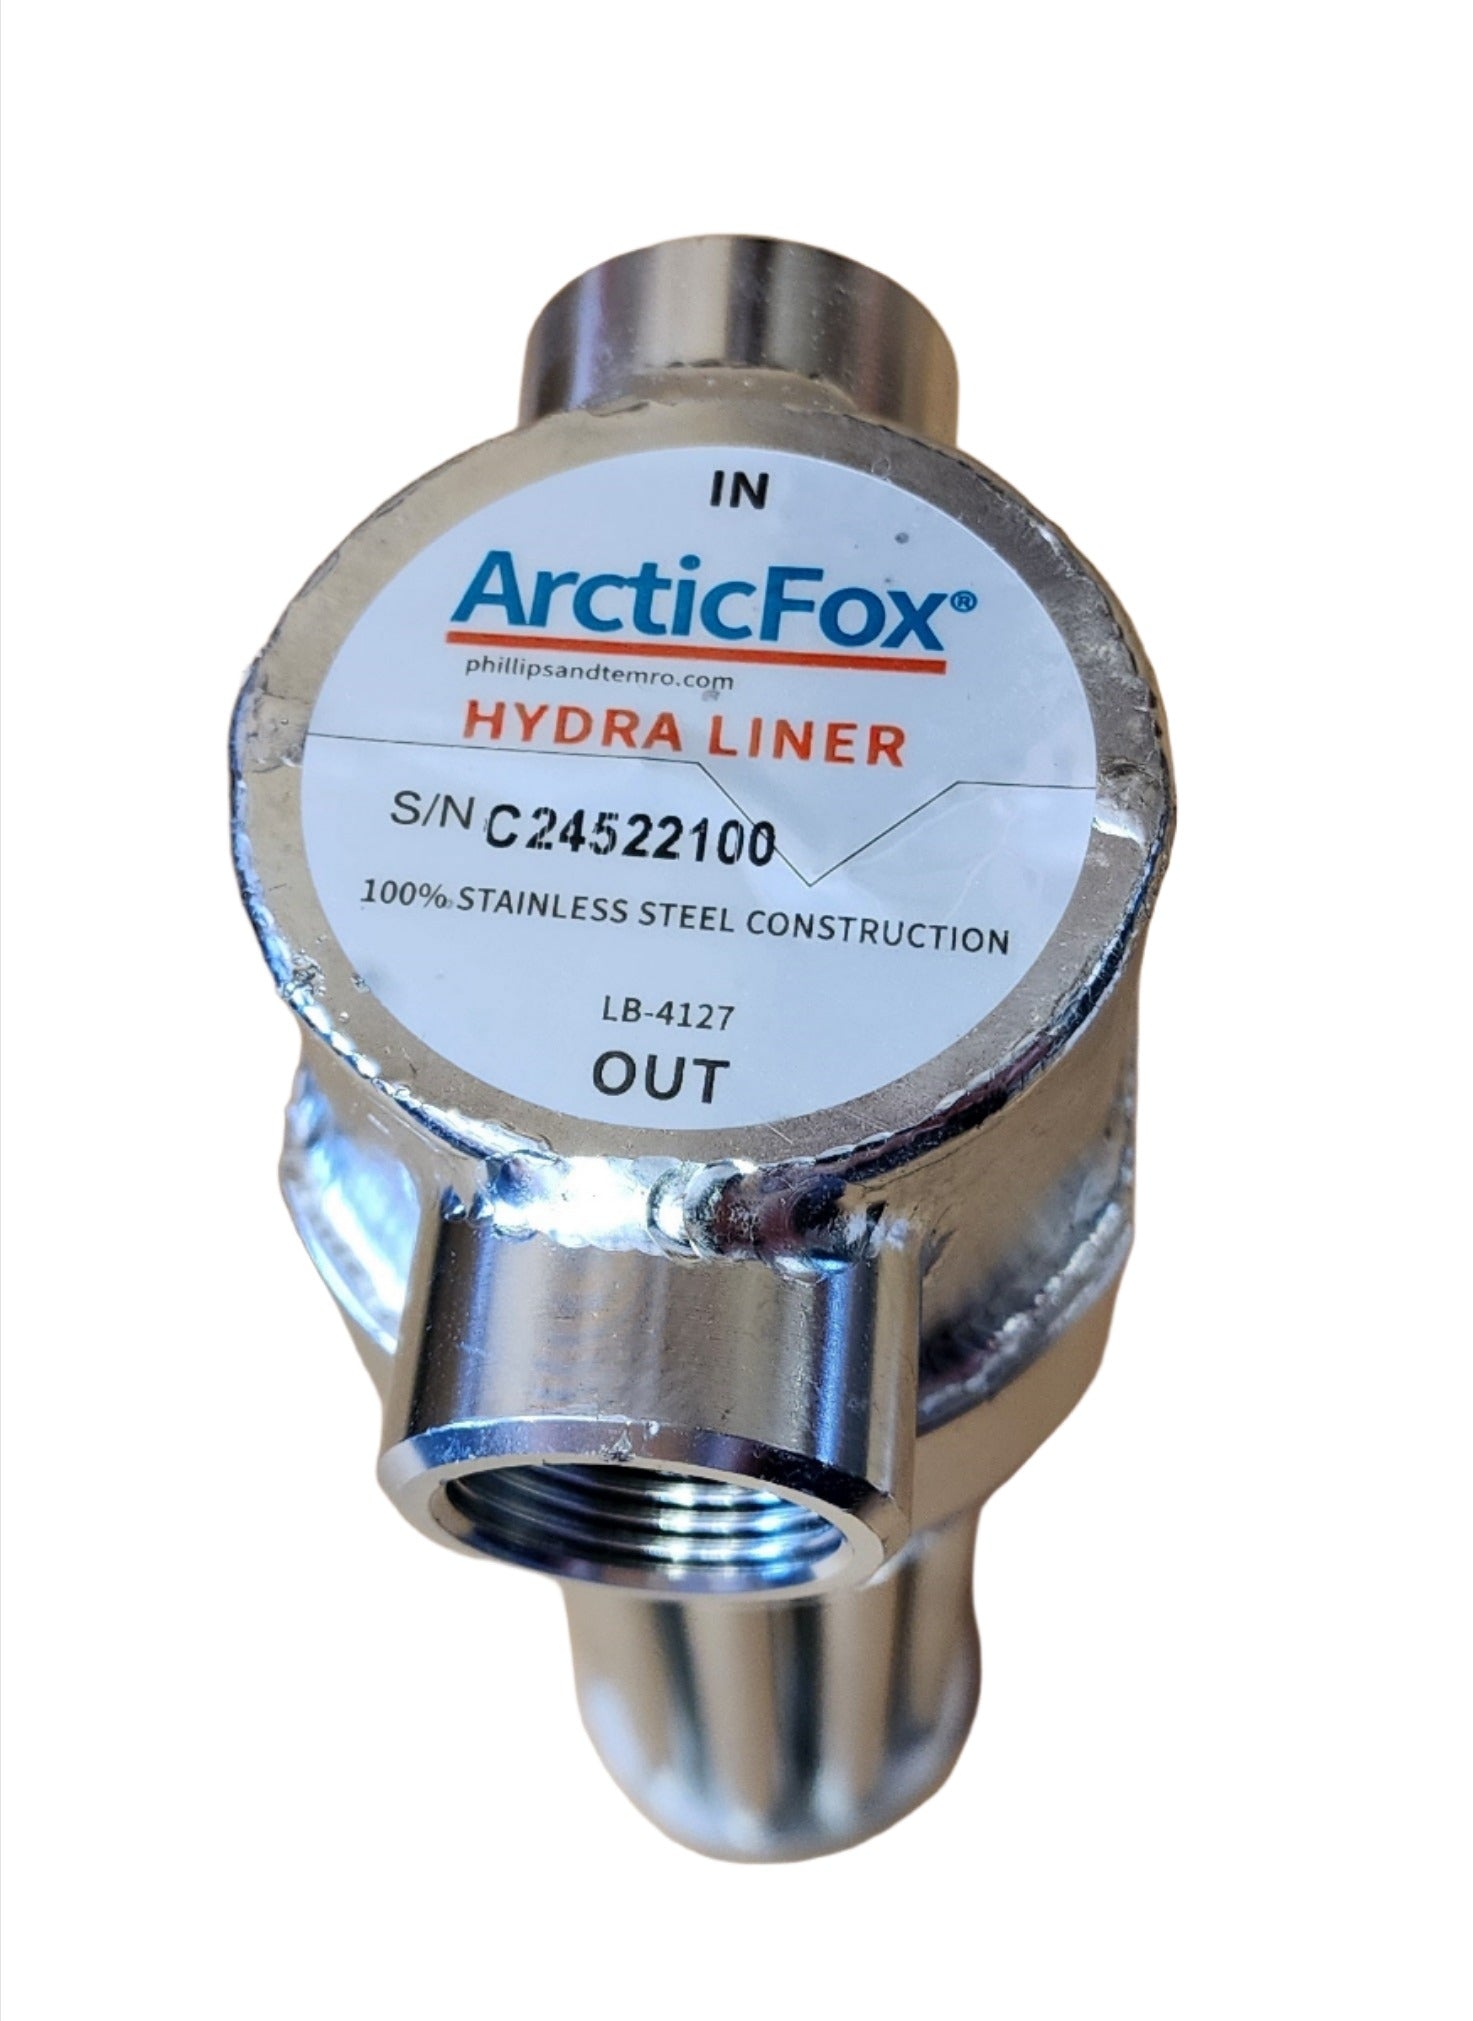 Arctic Fox Hydra Liner In-Tank Fluid Warmer H-4000-8